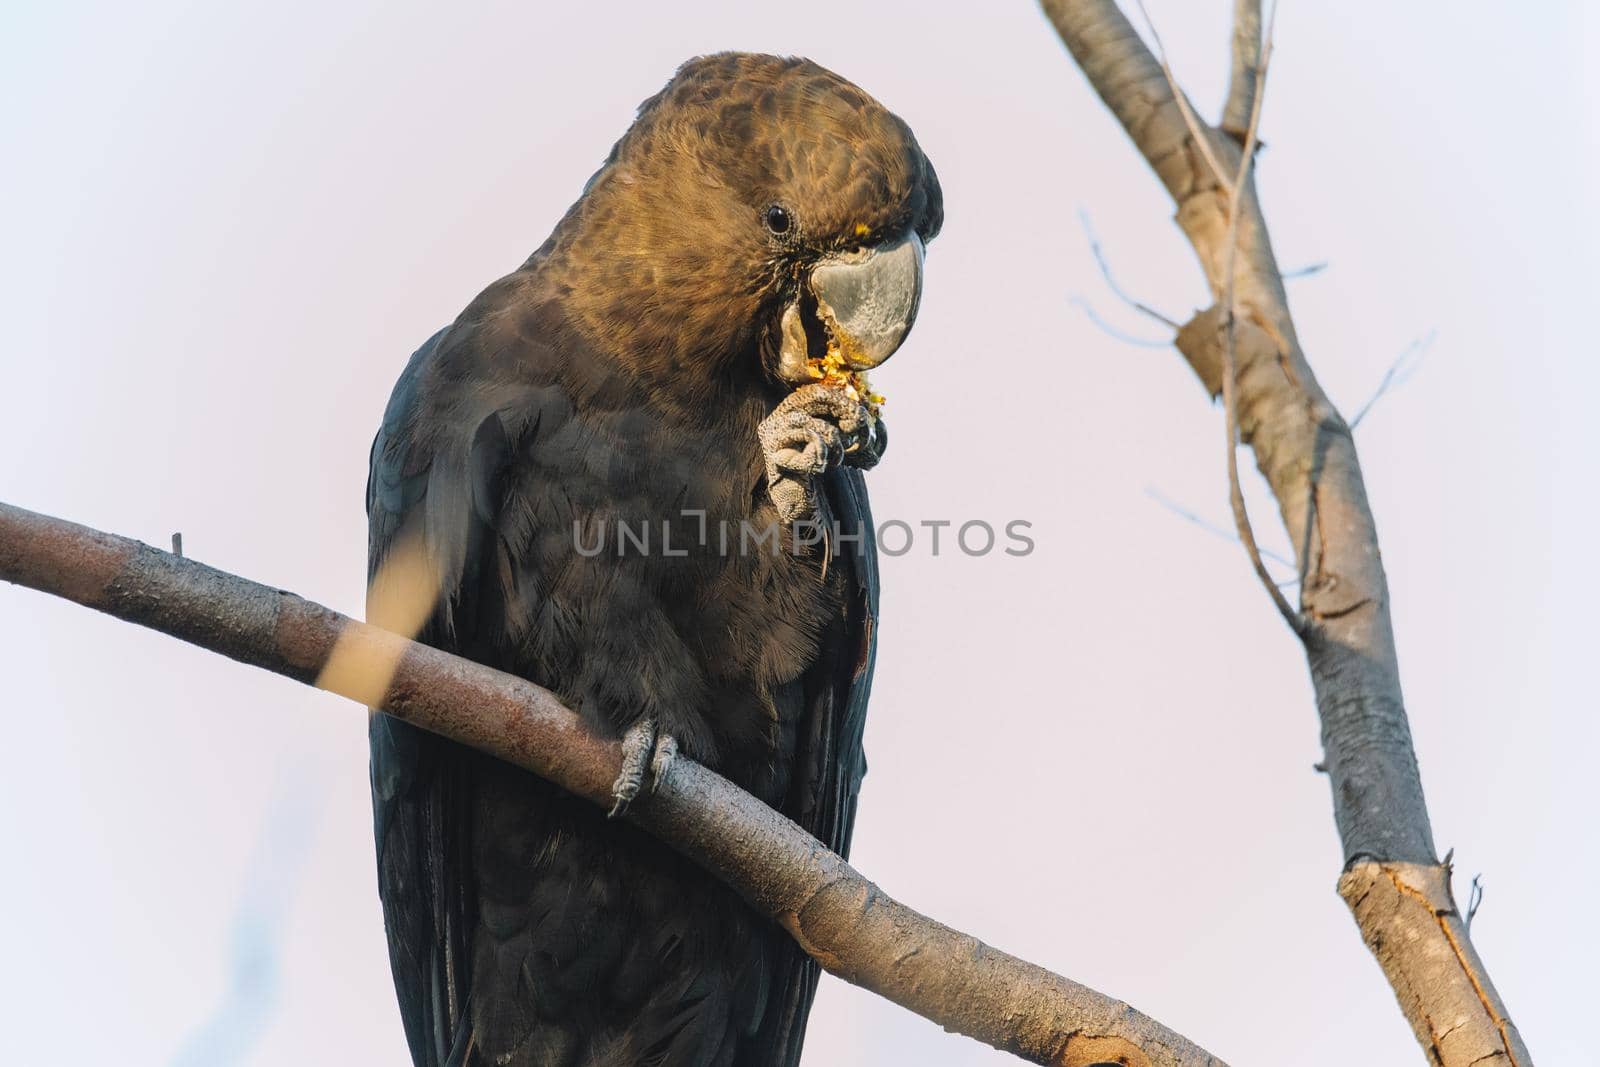 A Male Glossy black cockatoo feeding on allocasuarina diminuta . High quality photo